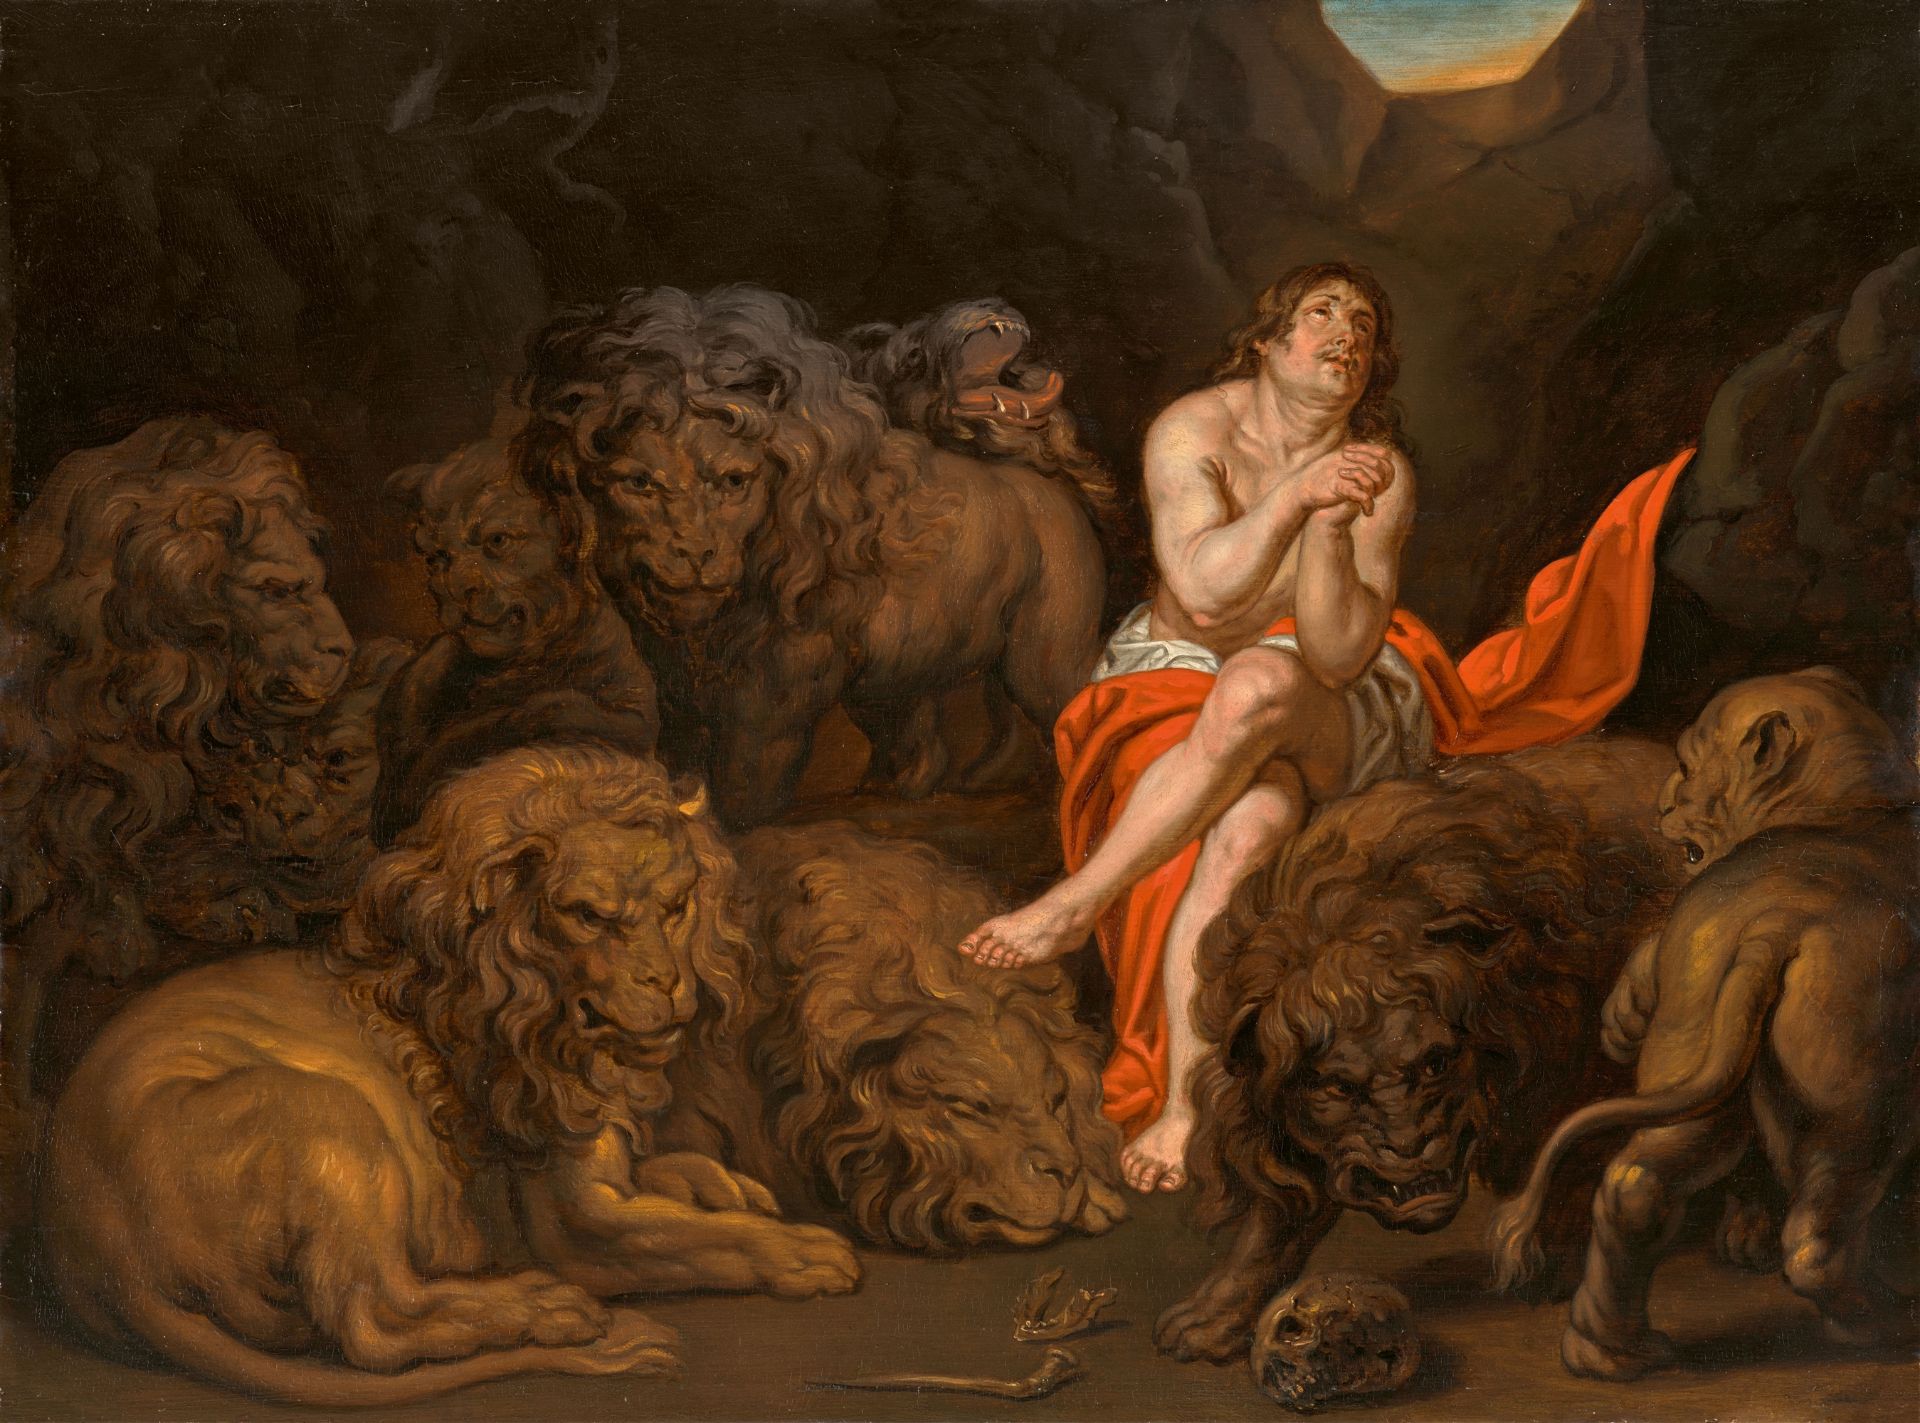 Peter Paul Rubens, after, Daniel in the Lions’ Den